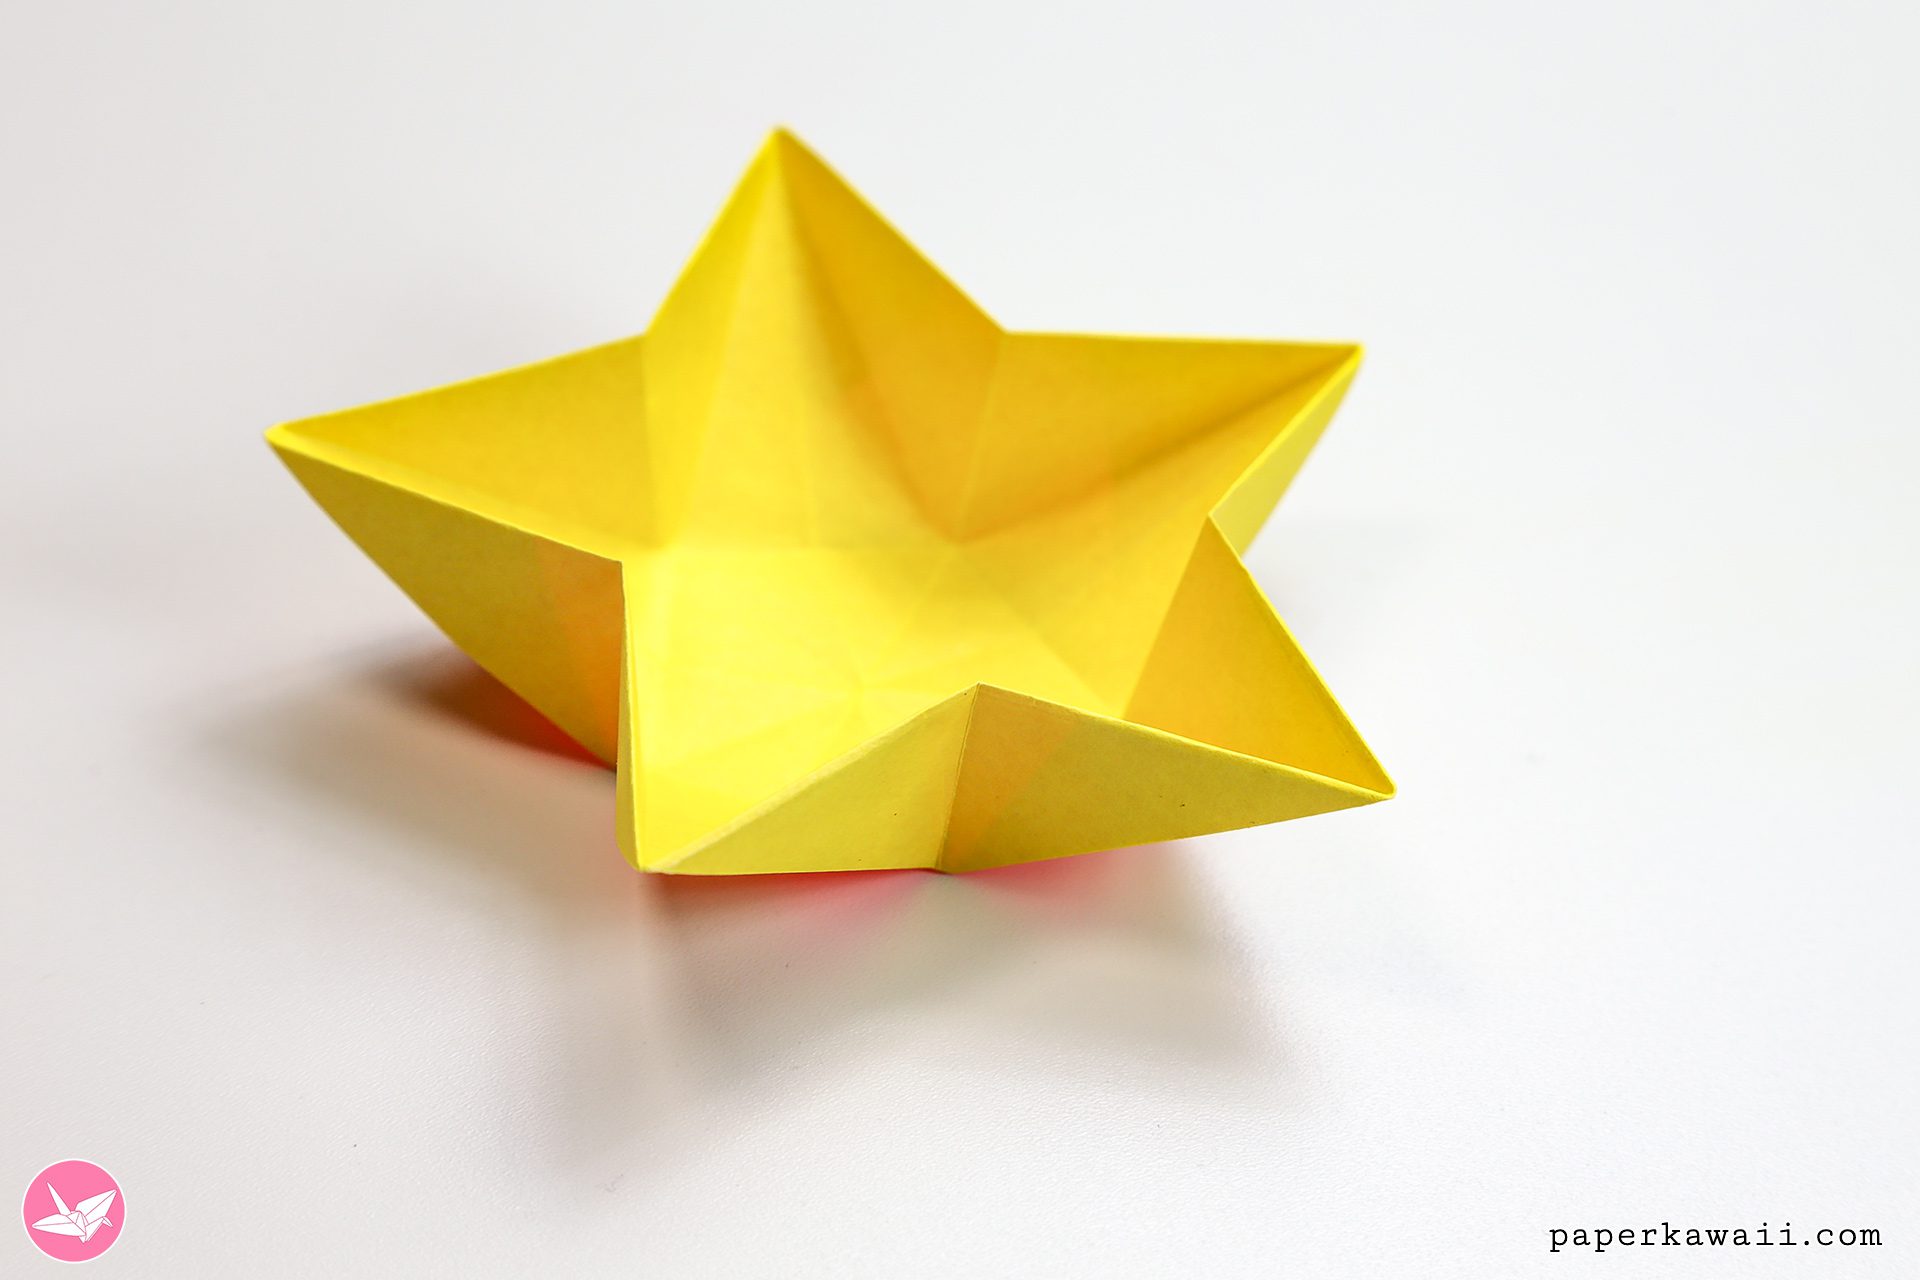 https://www.paperkawaii.com/wp-content/uploads/2021/10/origami-star-bowl-tutorial-paper-kawaii-02.jpg